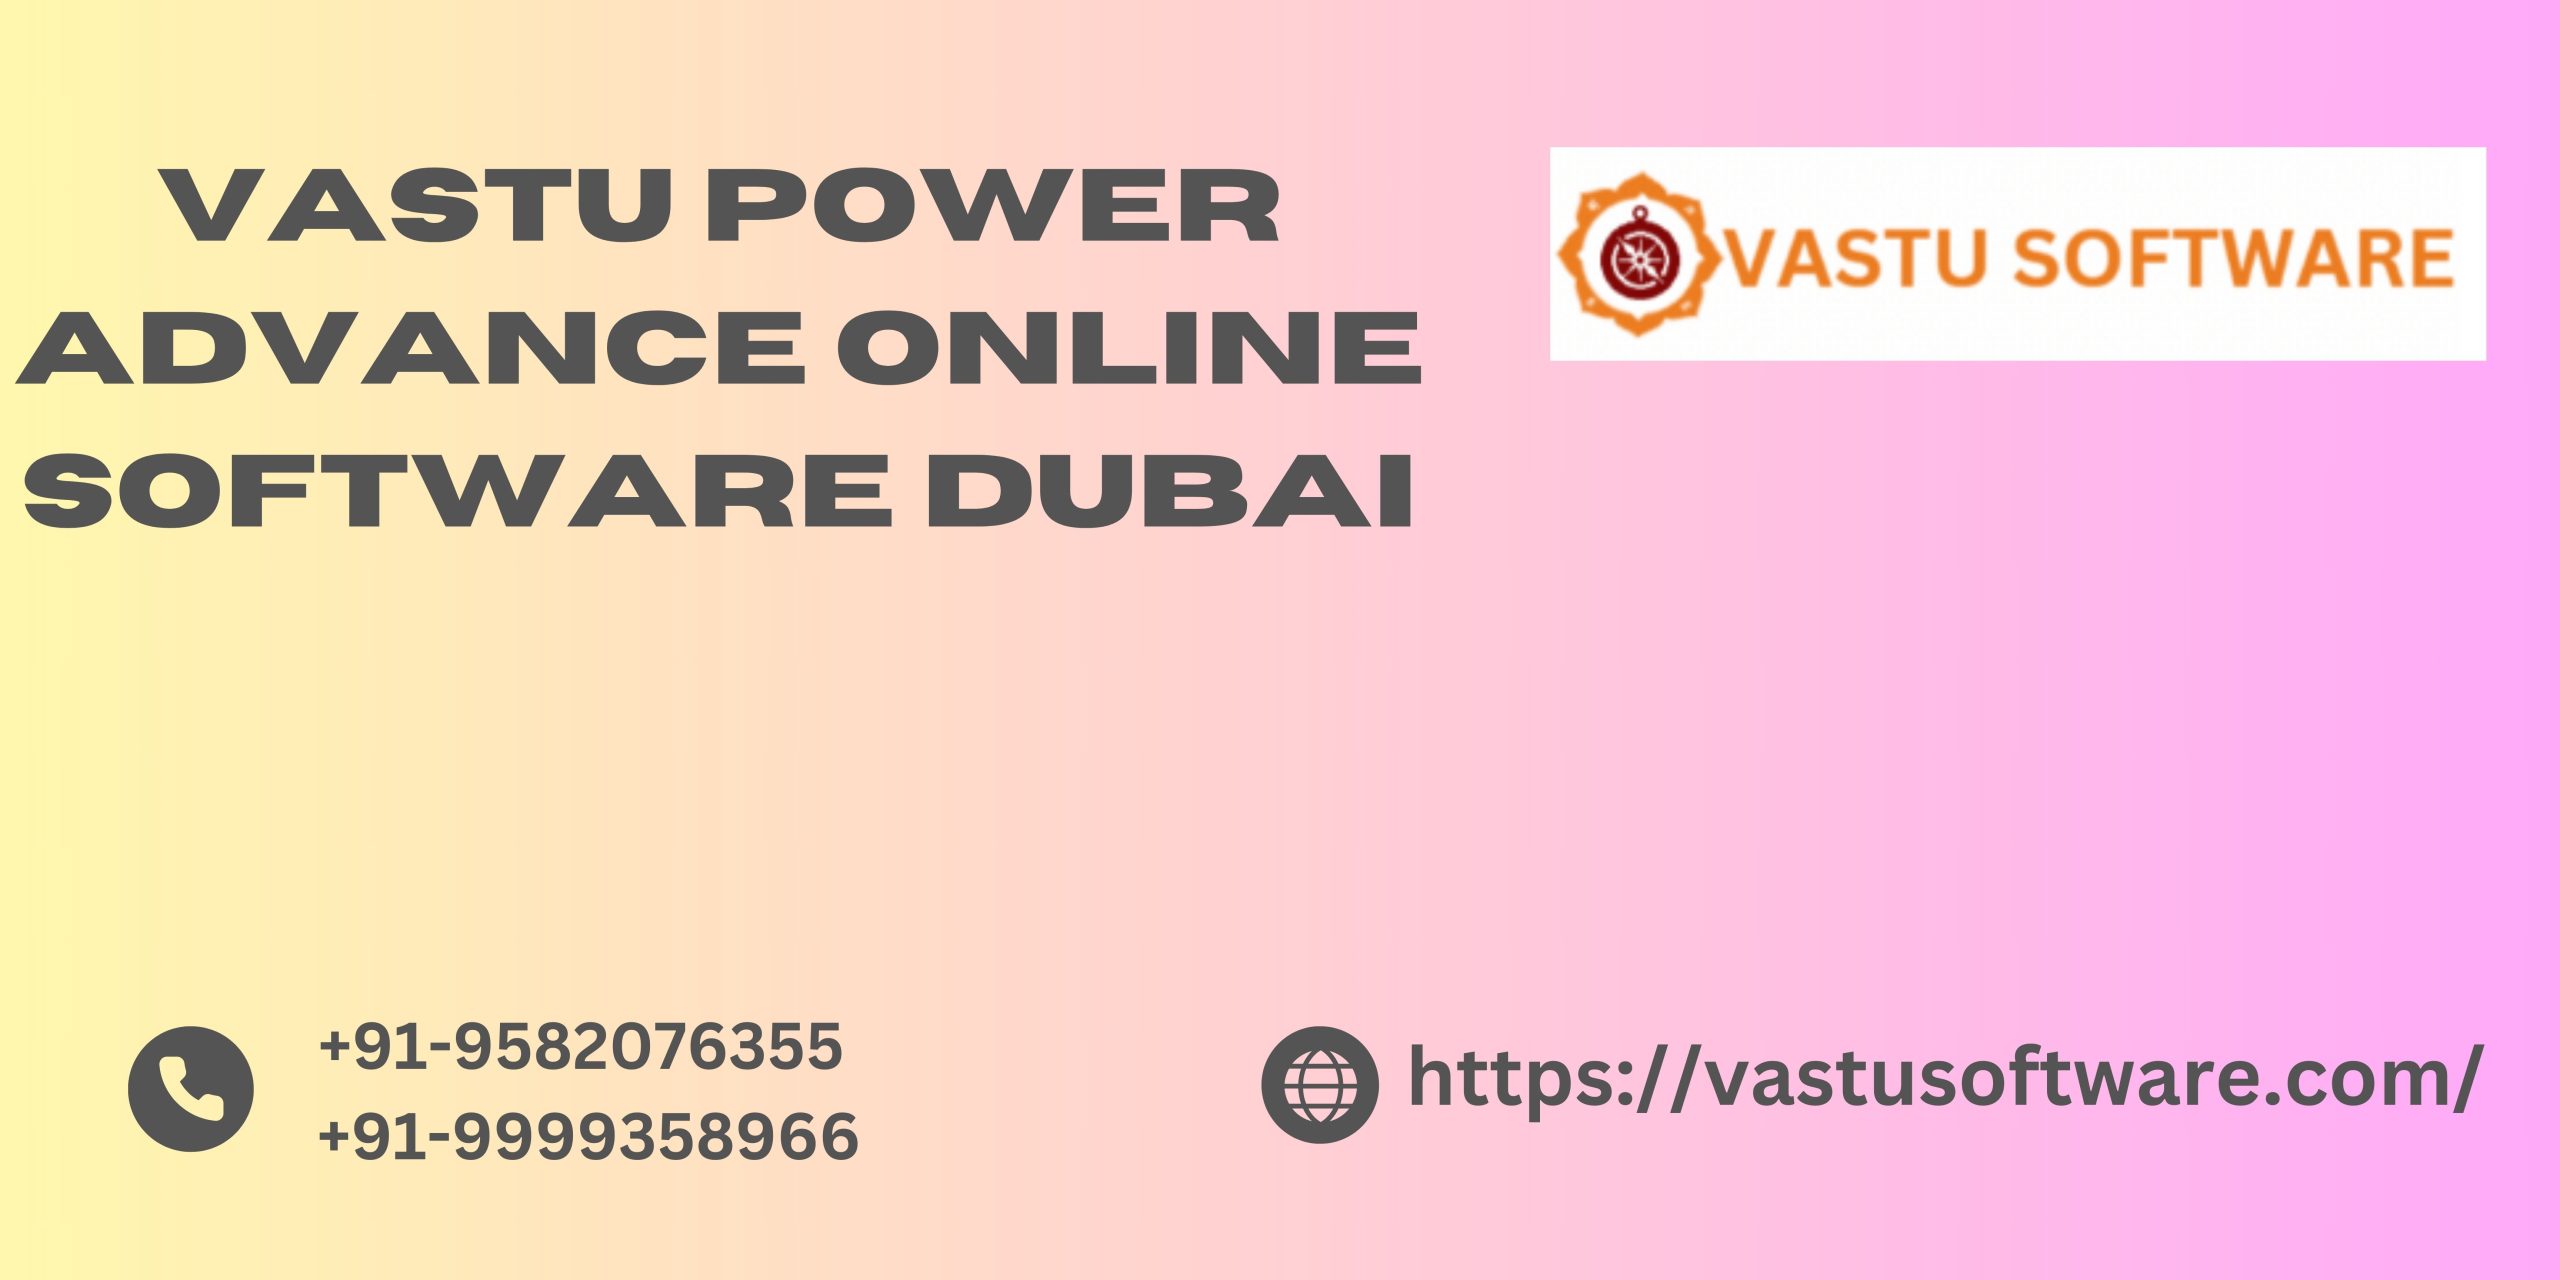 VASTU POWER ADVANCE ONLINE SOFTWARE DUBAI